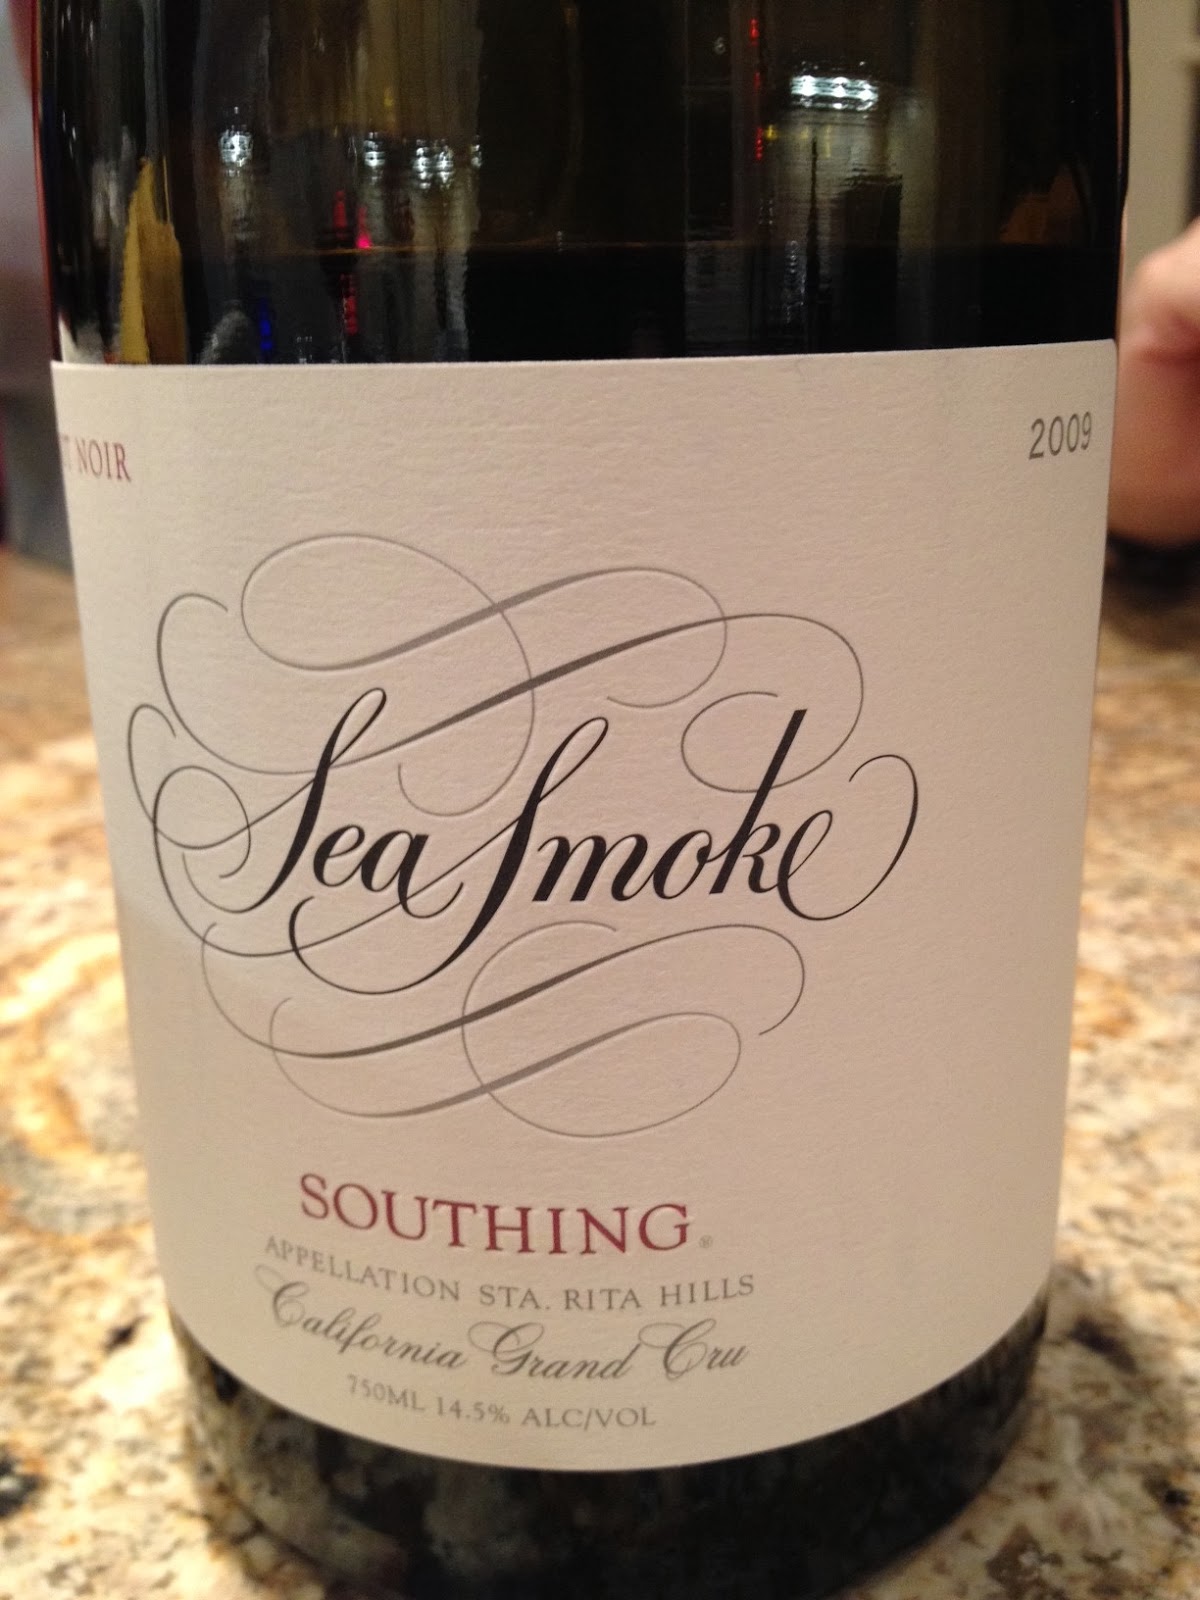 Wines Worth Trying: 2009 Sea Smoke pinot noir Southing